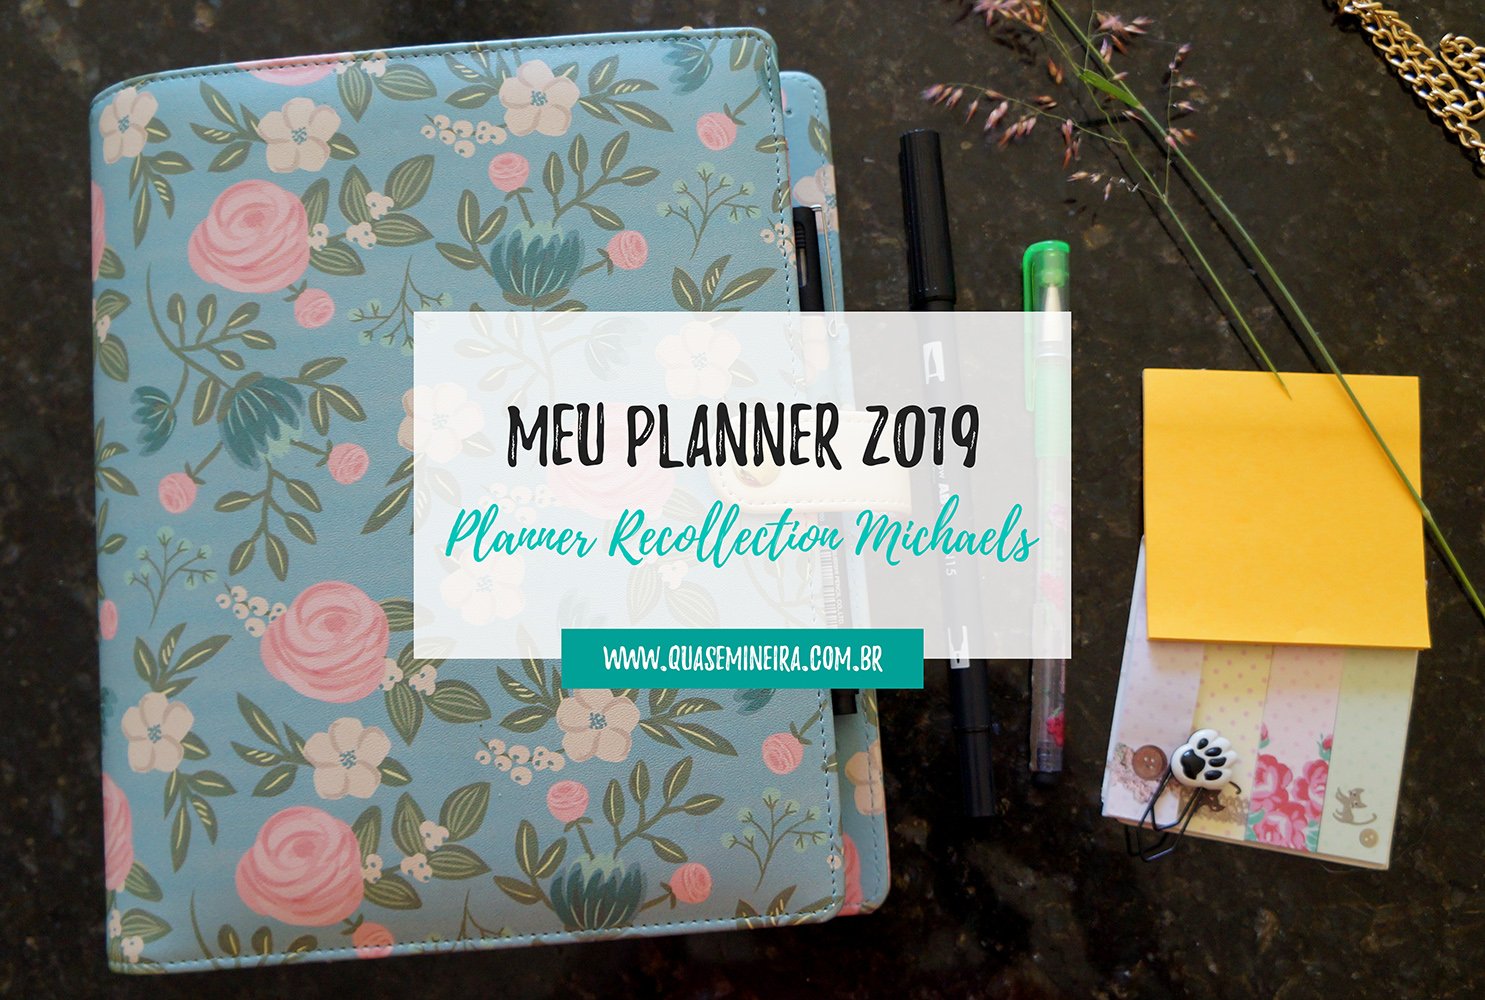 Meu Planner 2019 – Planner Recollection Michaels